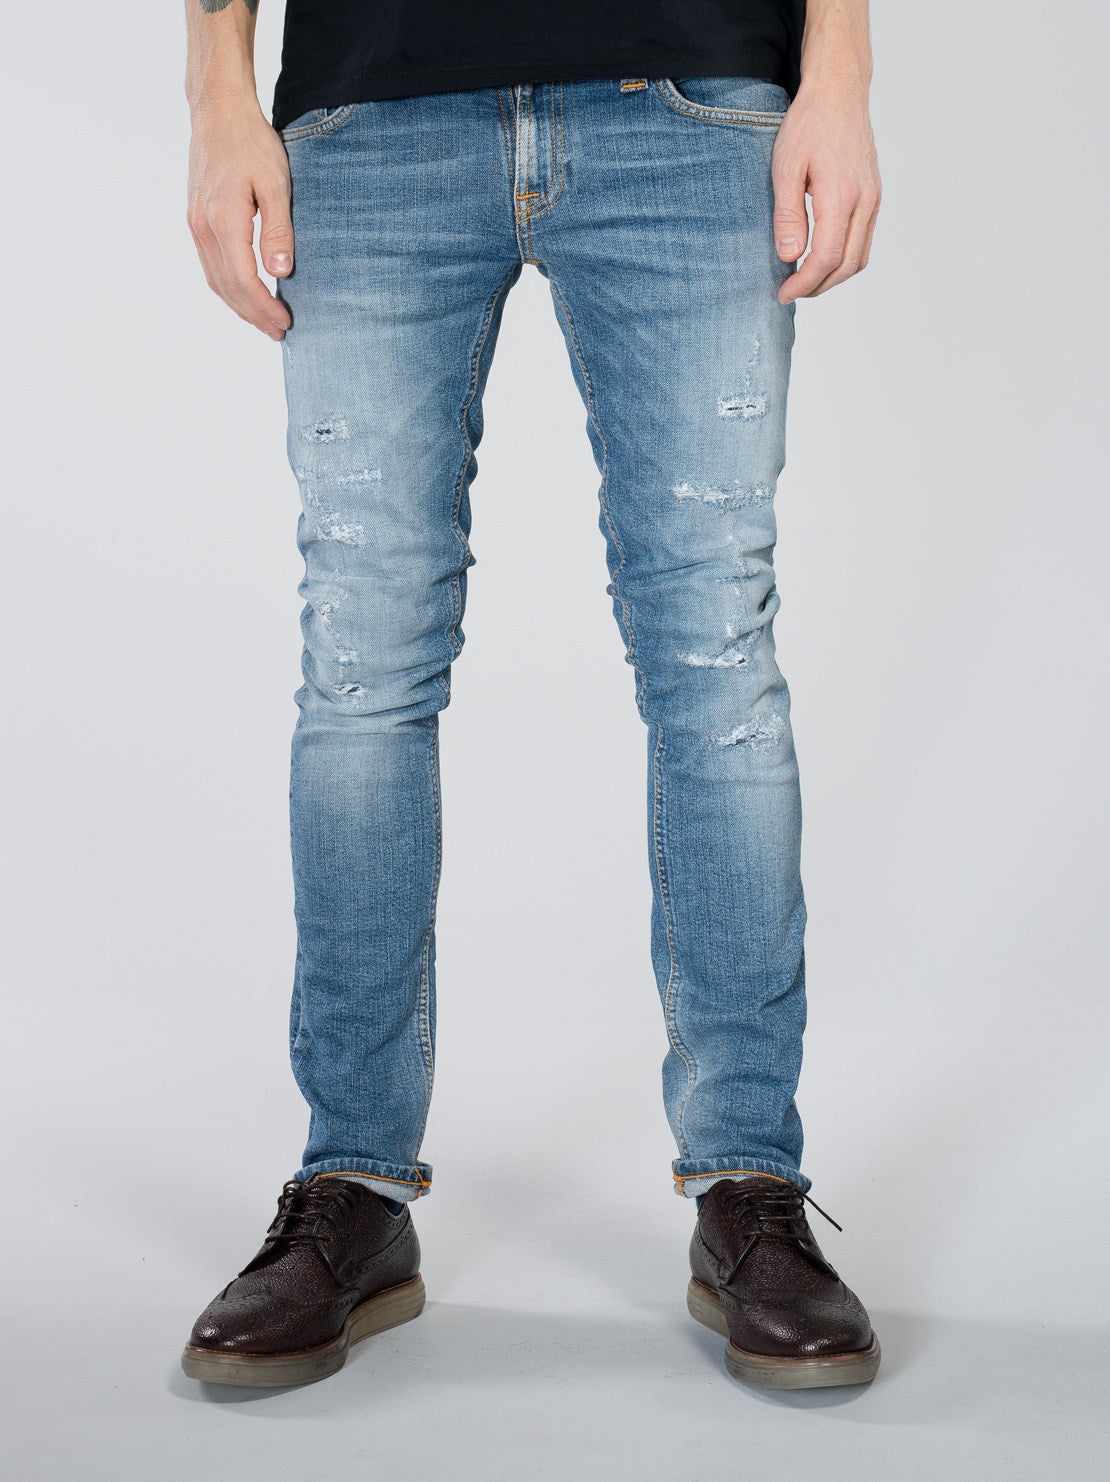 Nudie Jeans Tight Long John Stian Replica - Mildblend Supply Co